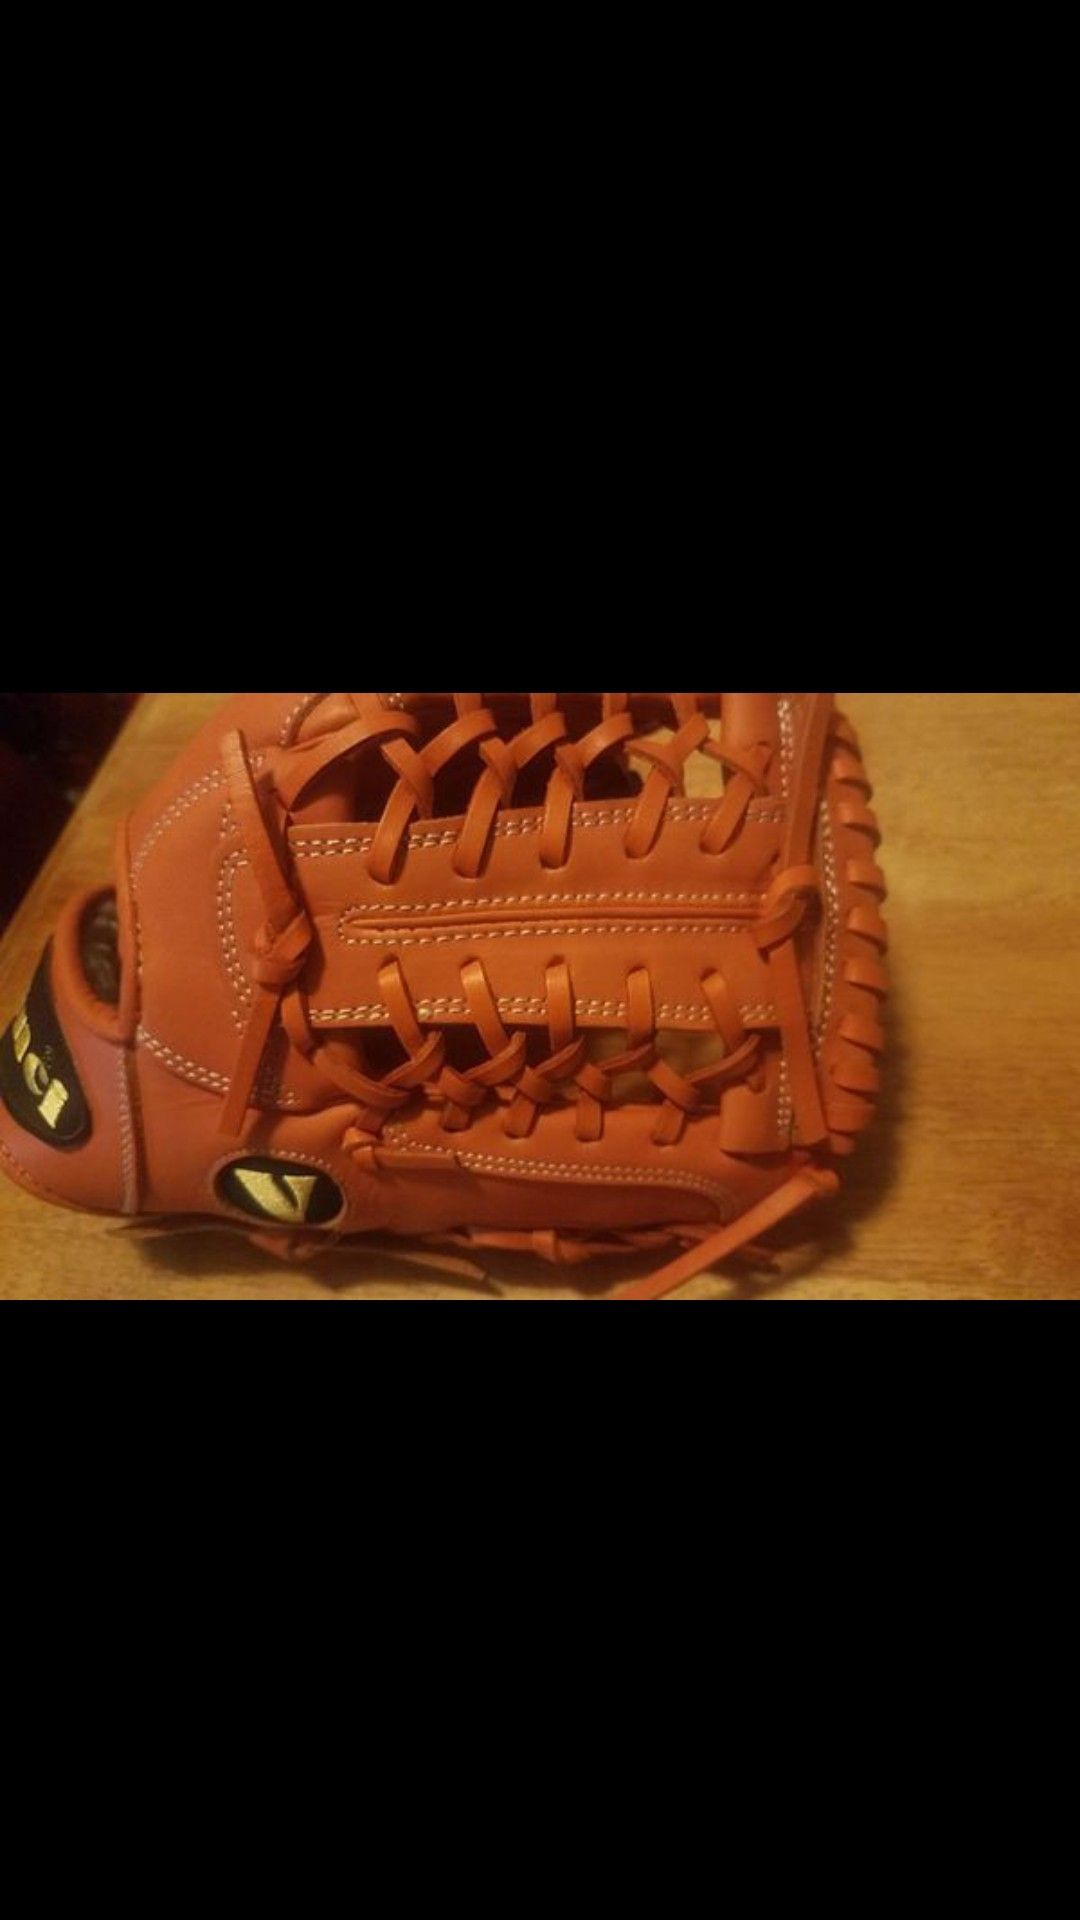 Vinci Pro Limited Series orange Baseball Glove